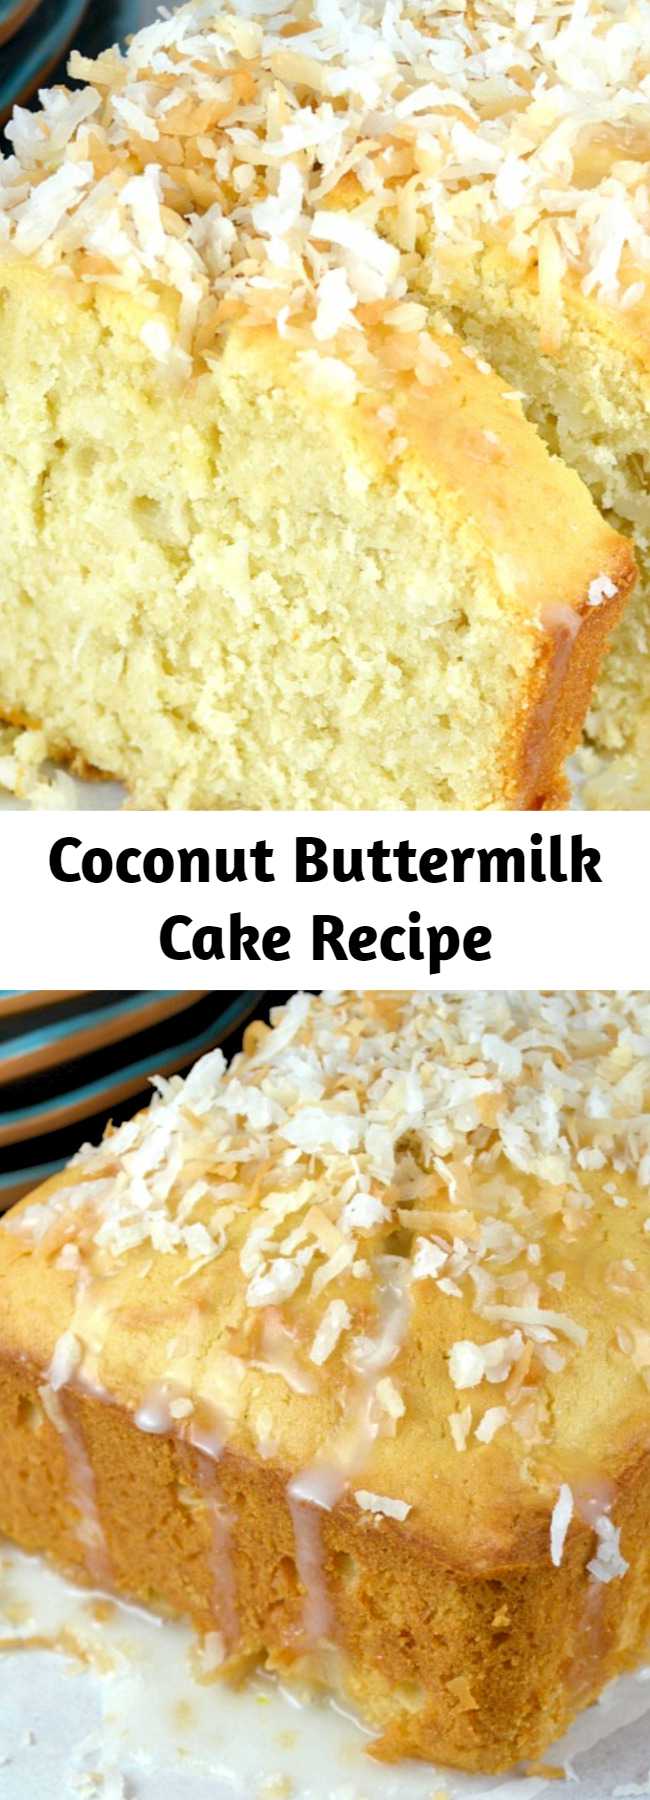 Coconut Buttermilk Cake Recipe